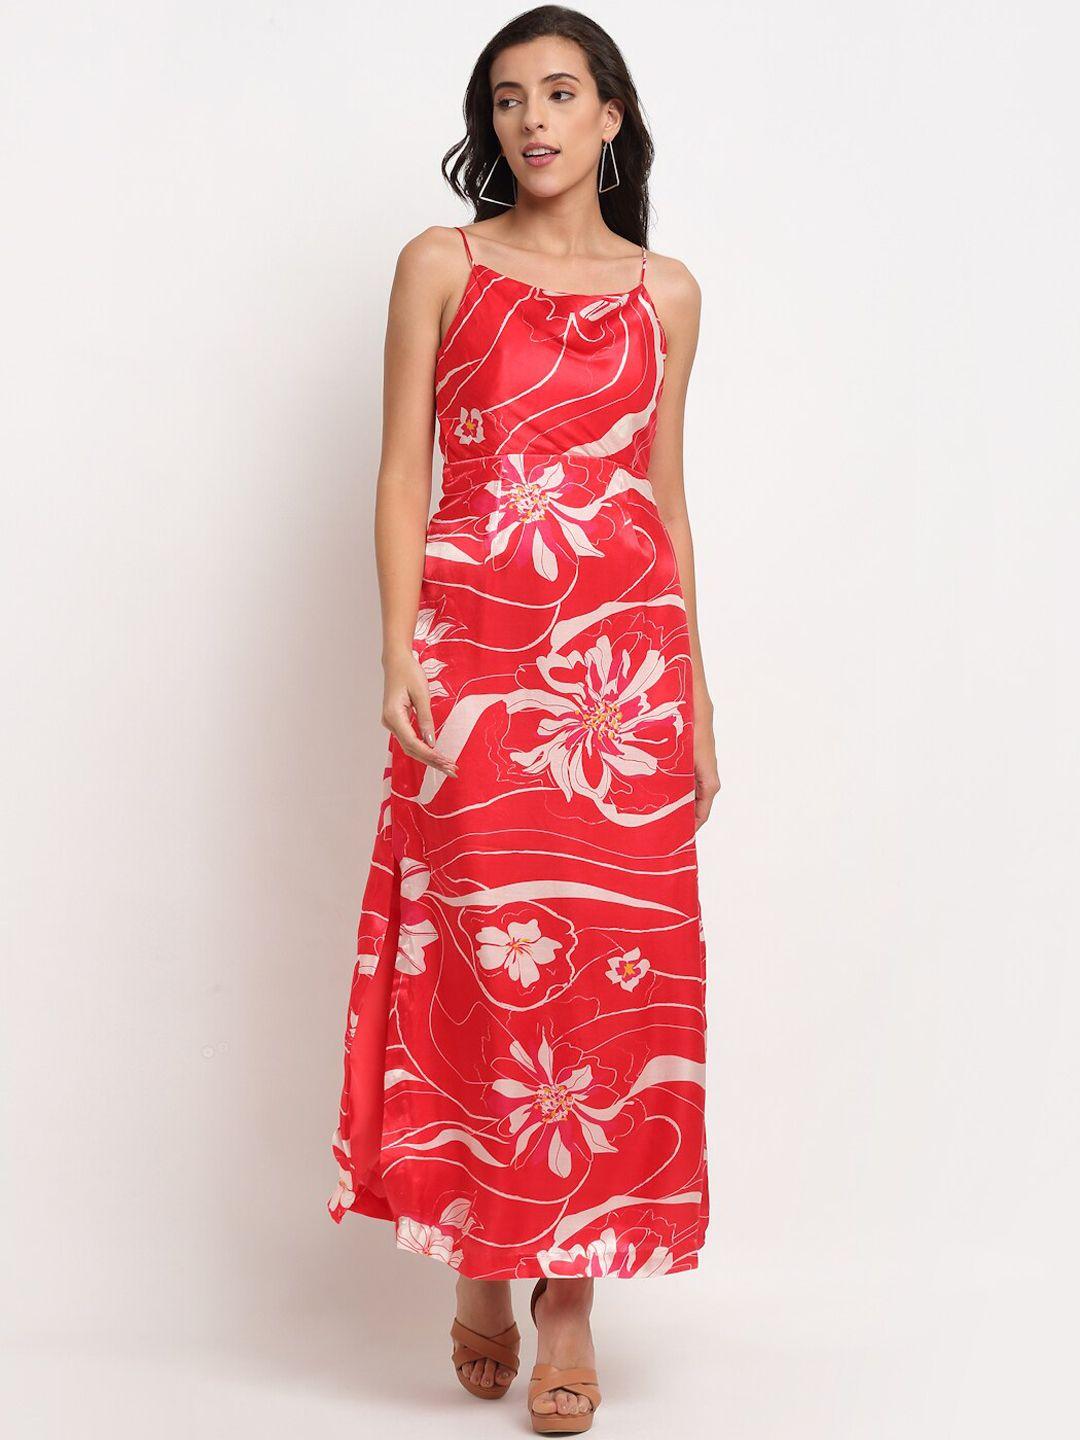 ewoke red & white floral maxi dress